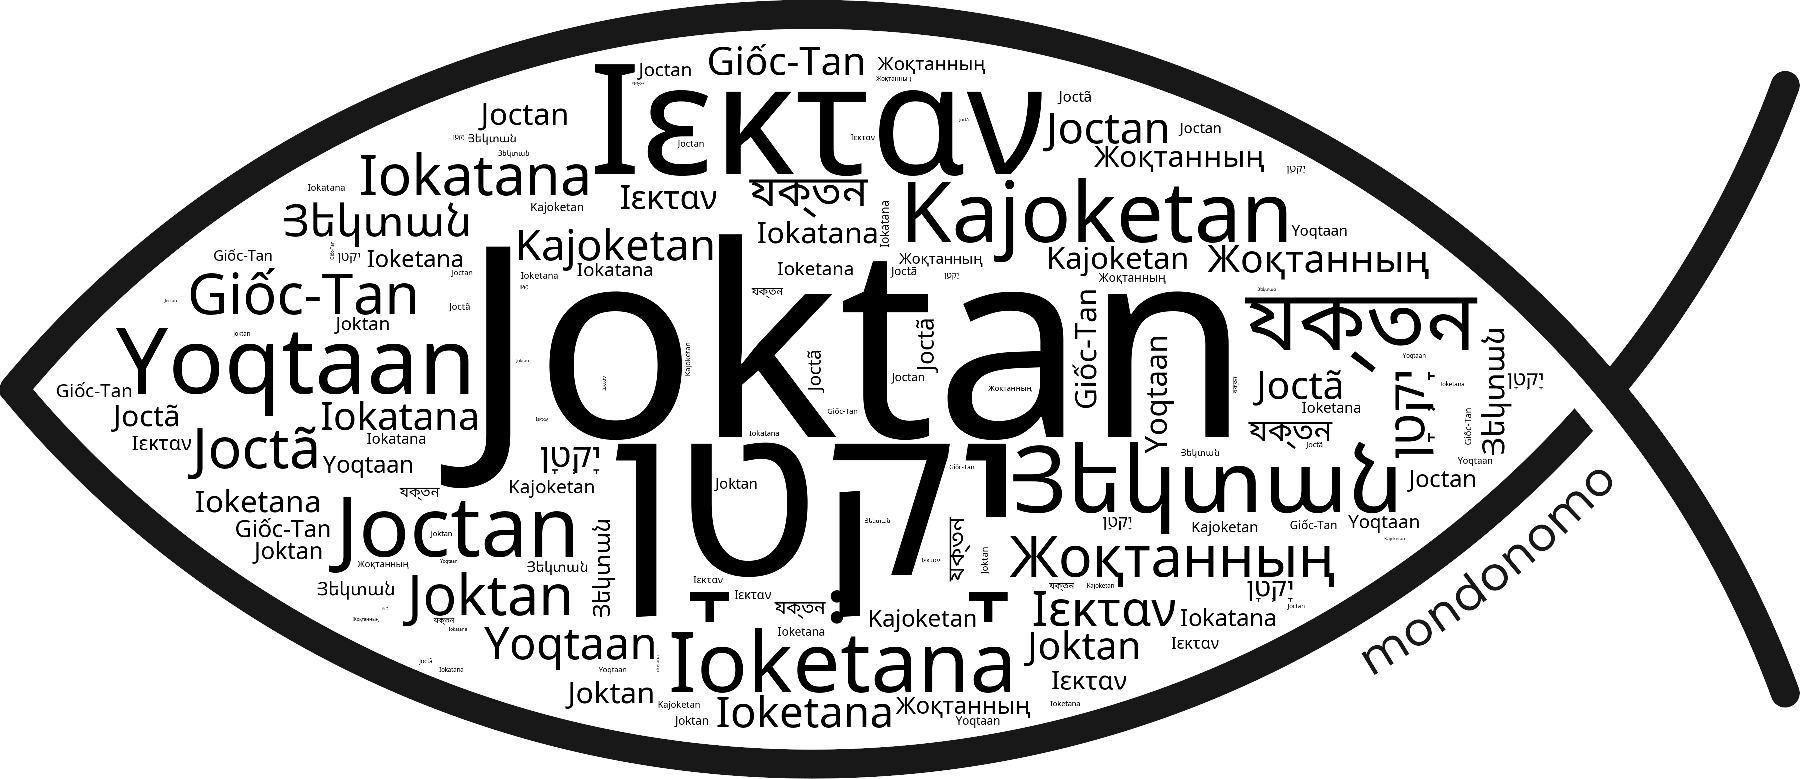 Name Joktan in the world's Bibles